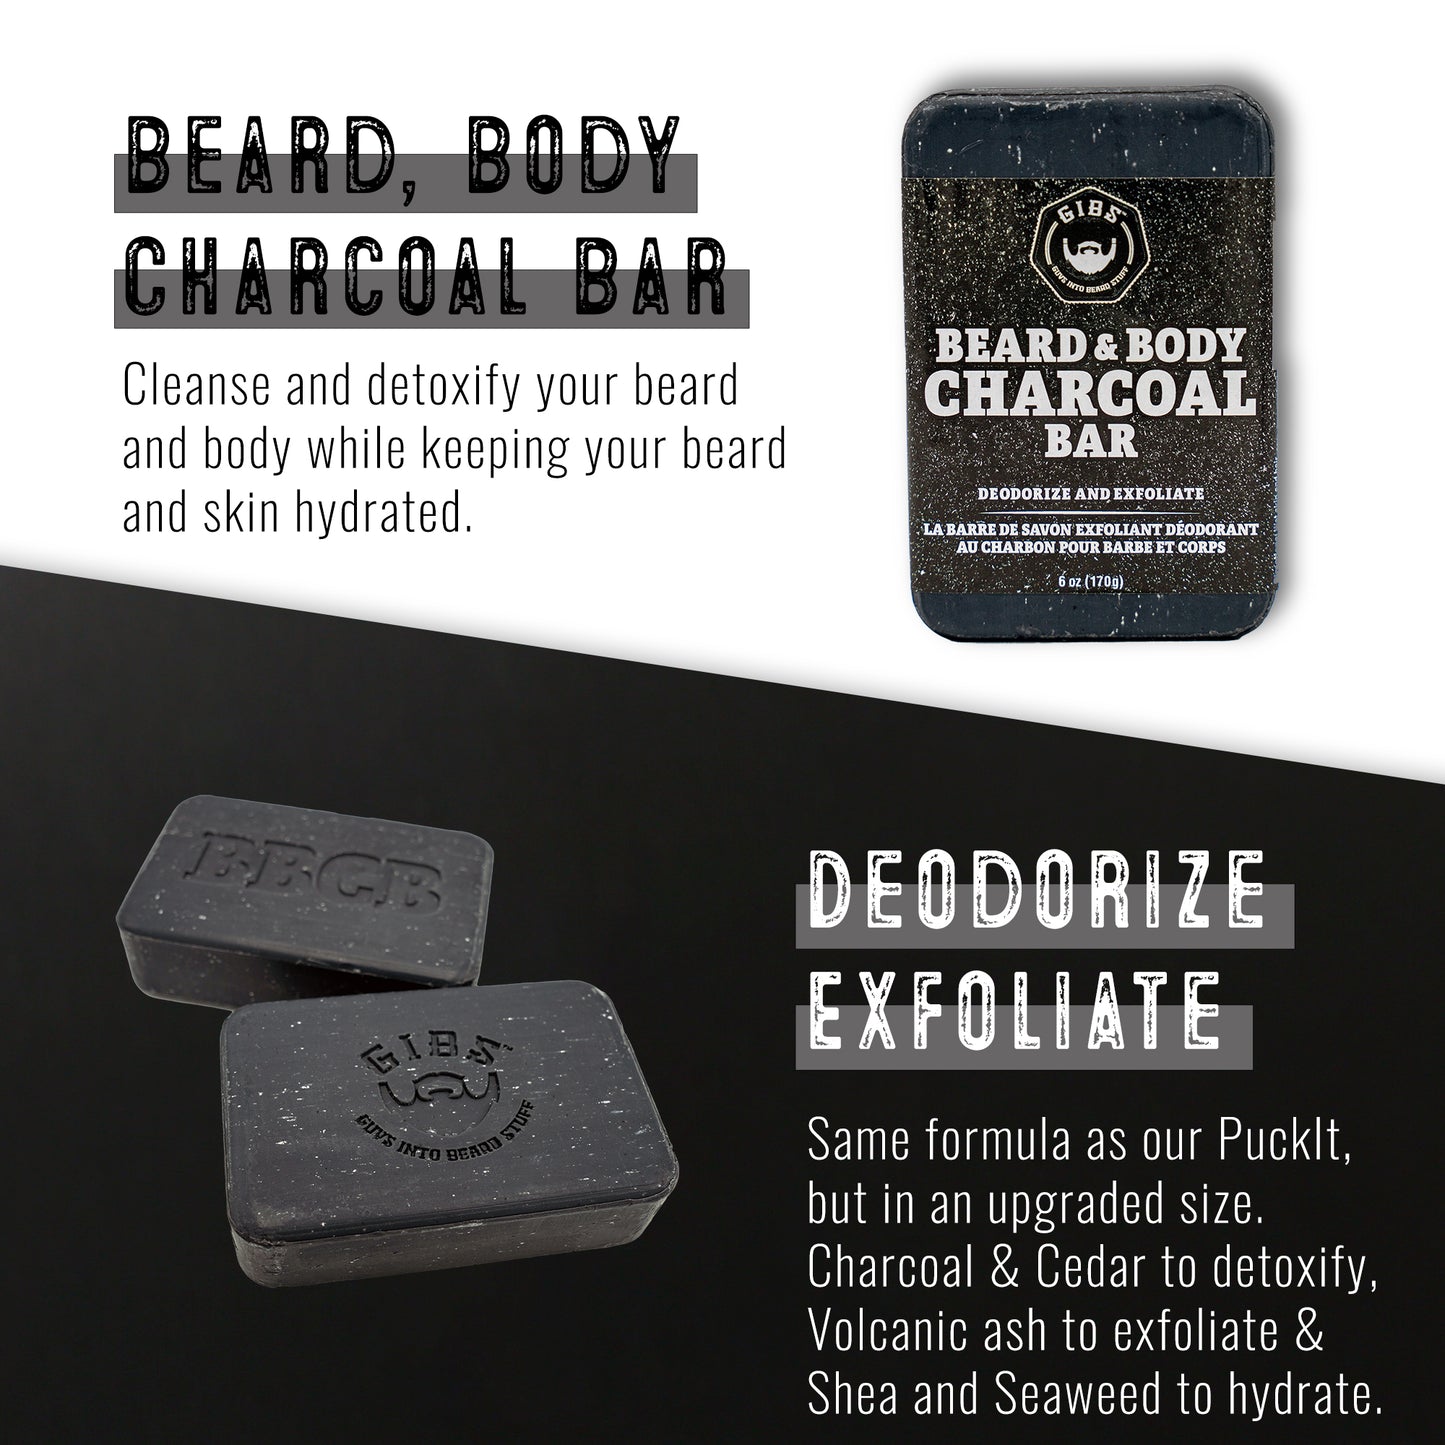 Charcoal Beard & Body Soap